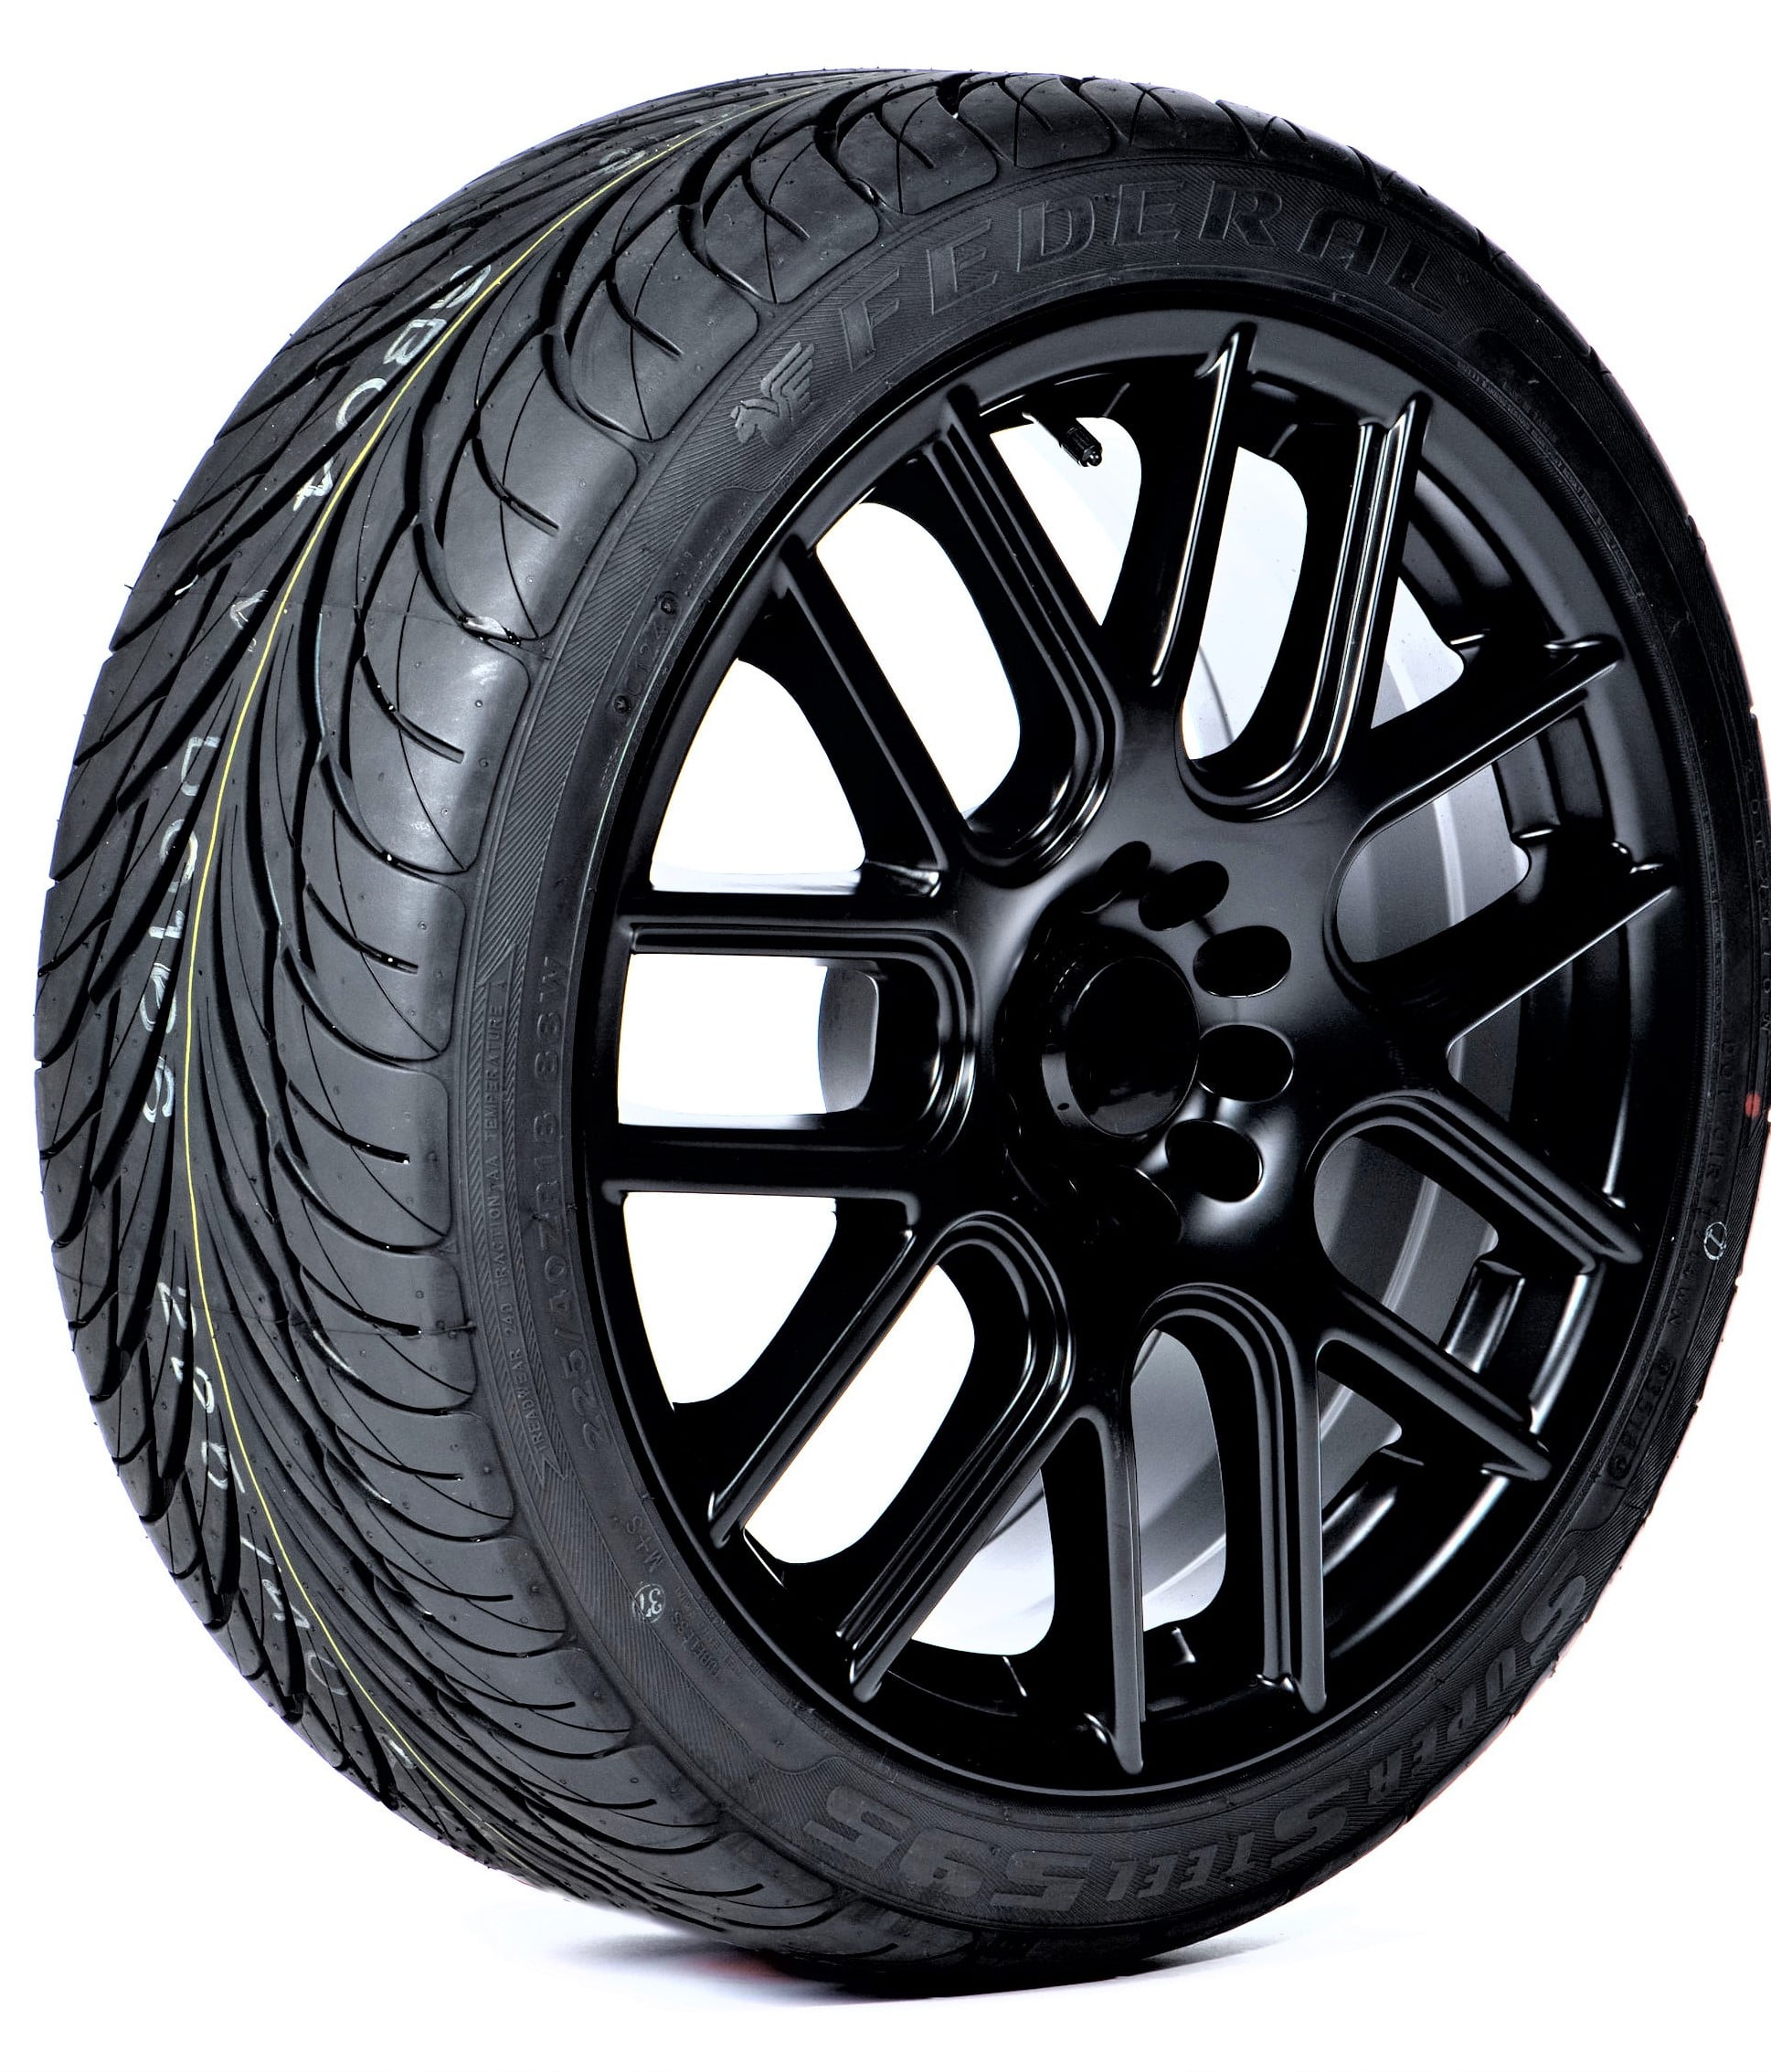 Federal 595RS-R Street Legal Racing Tire Tire - 205/50R15 89W